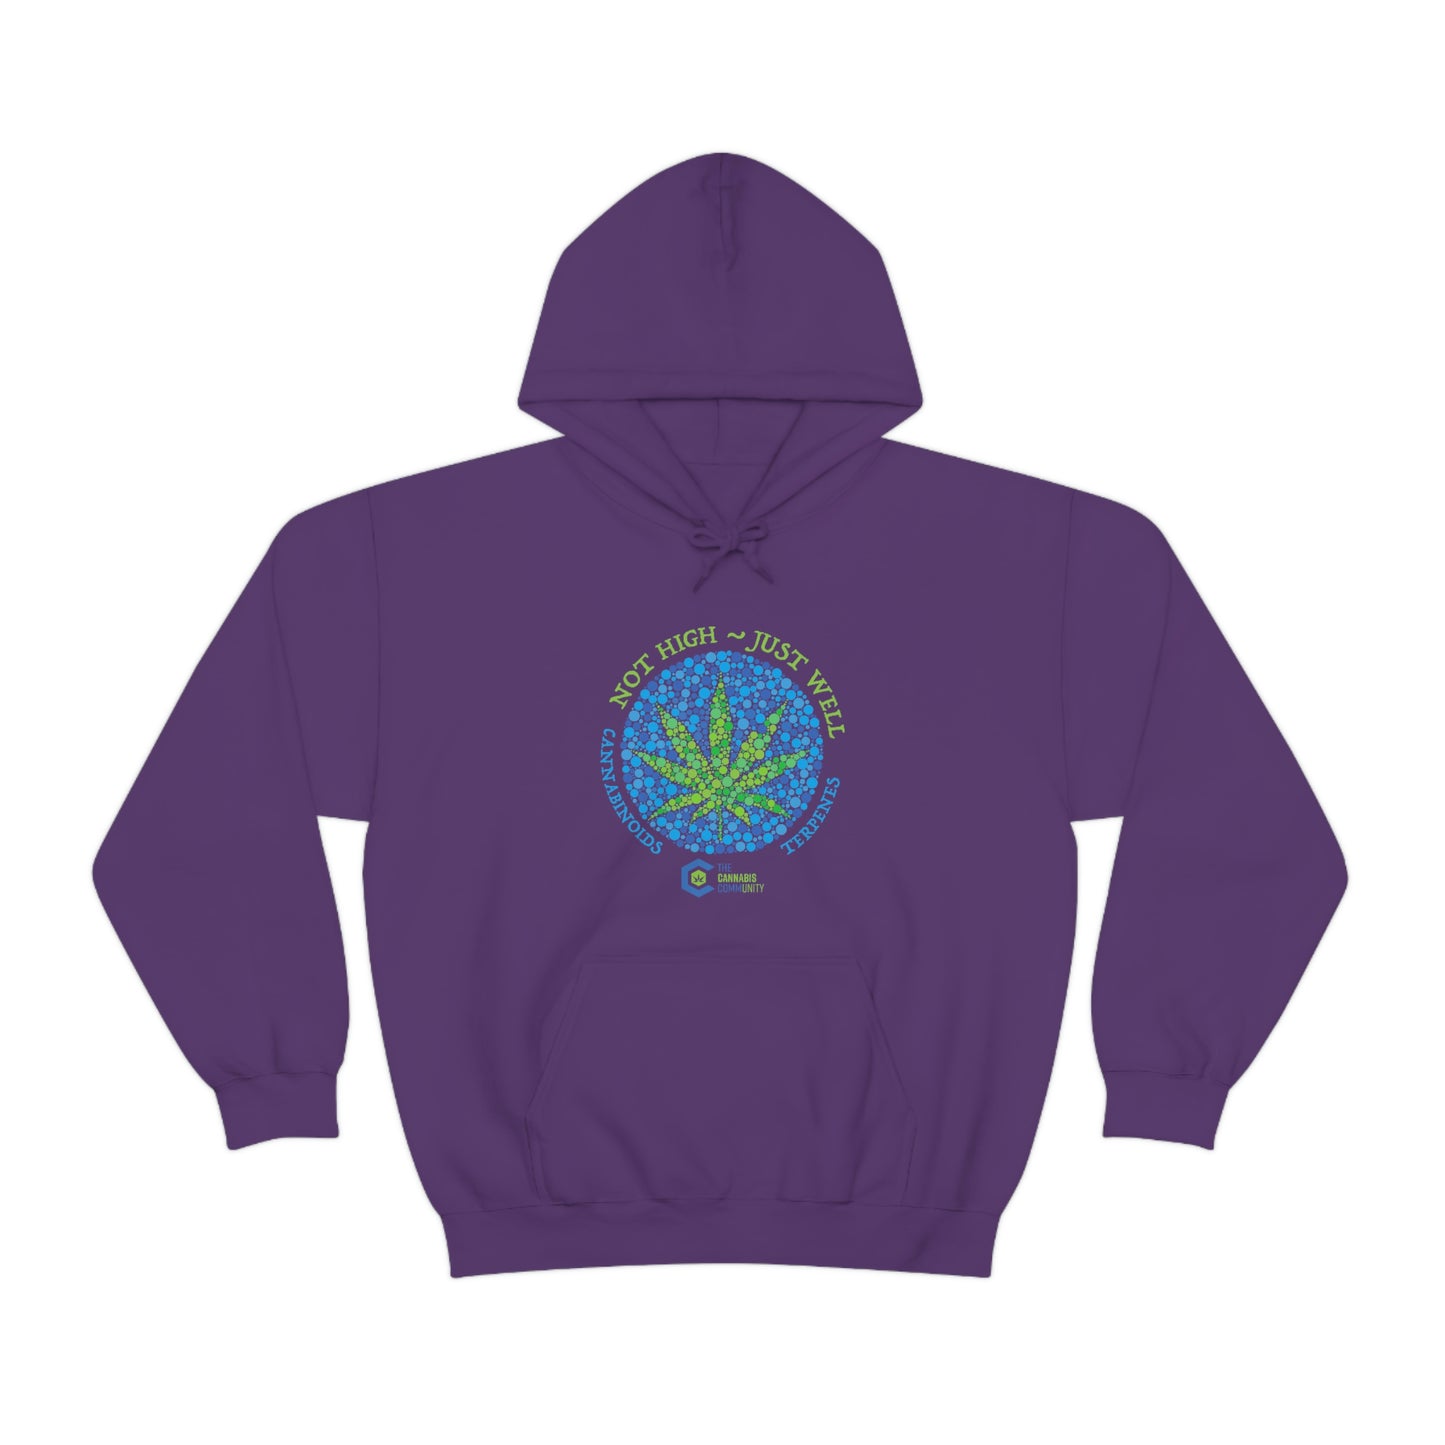 A Purple, Not High, Just Well Cannabis Hoodie with a marijuana leaf.